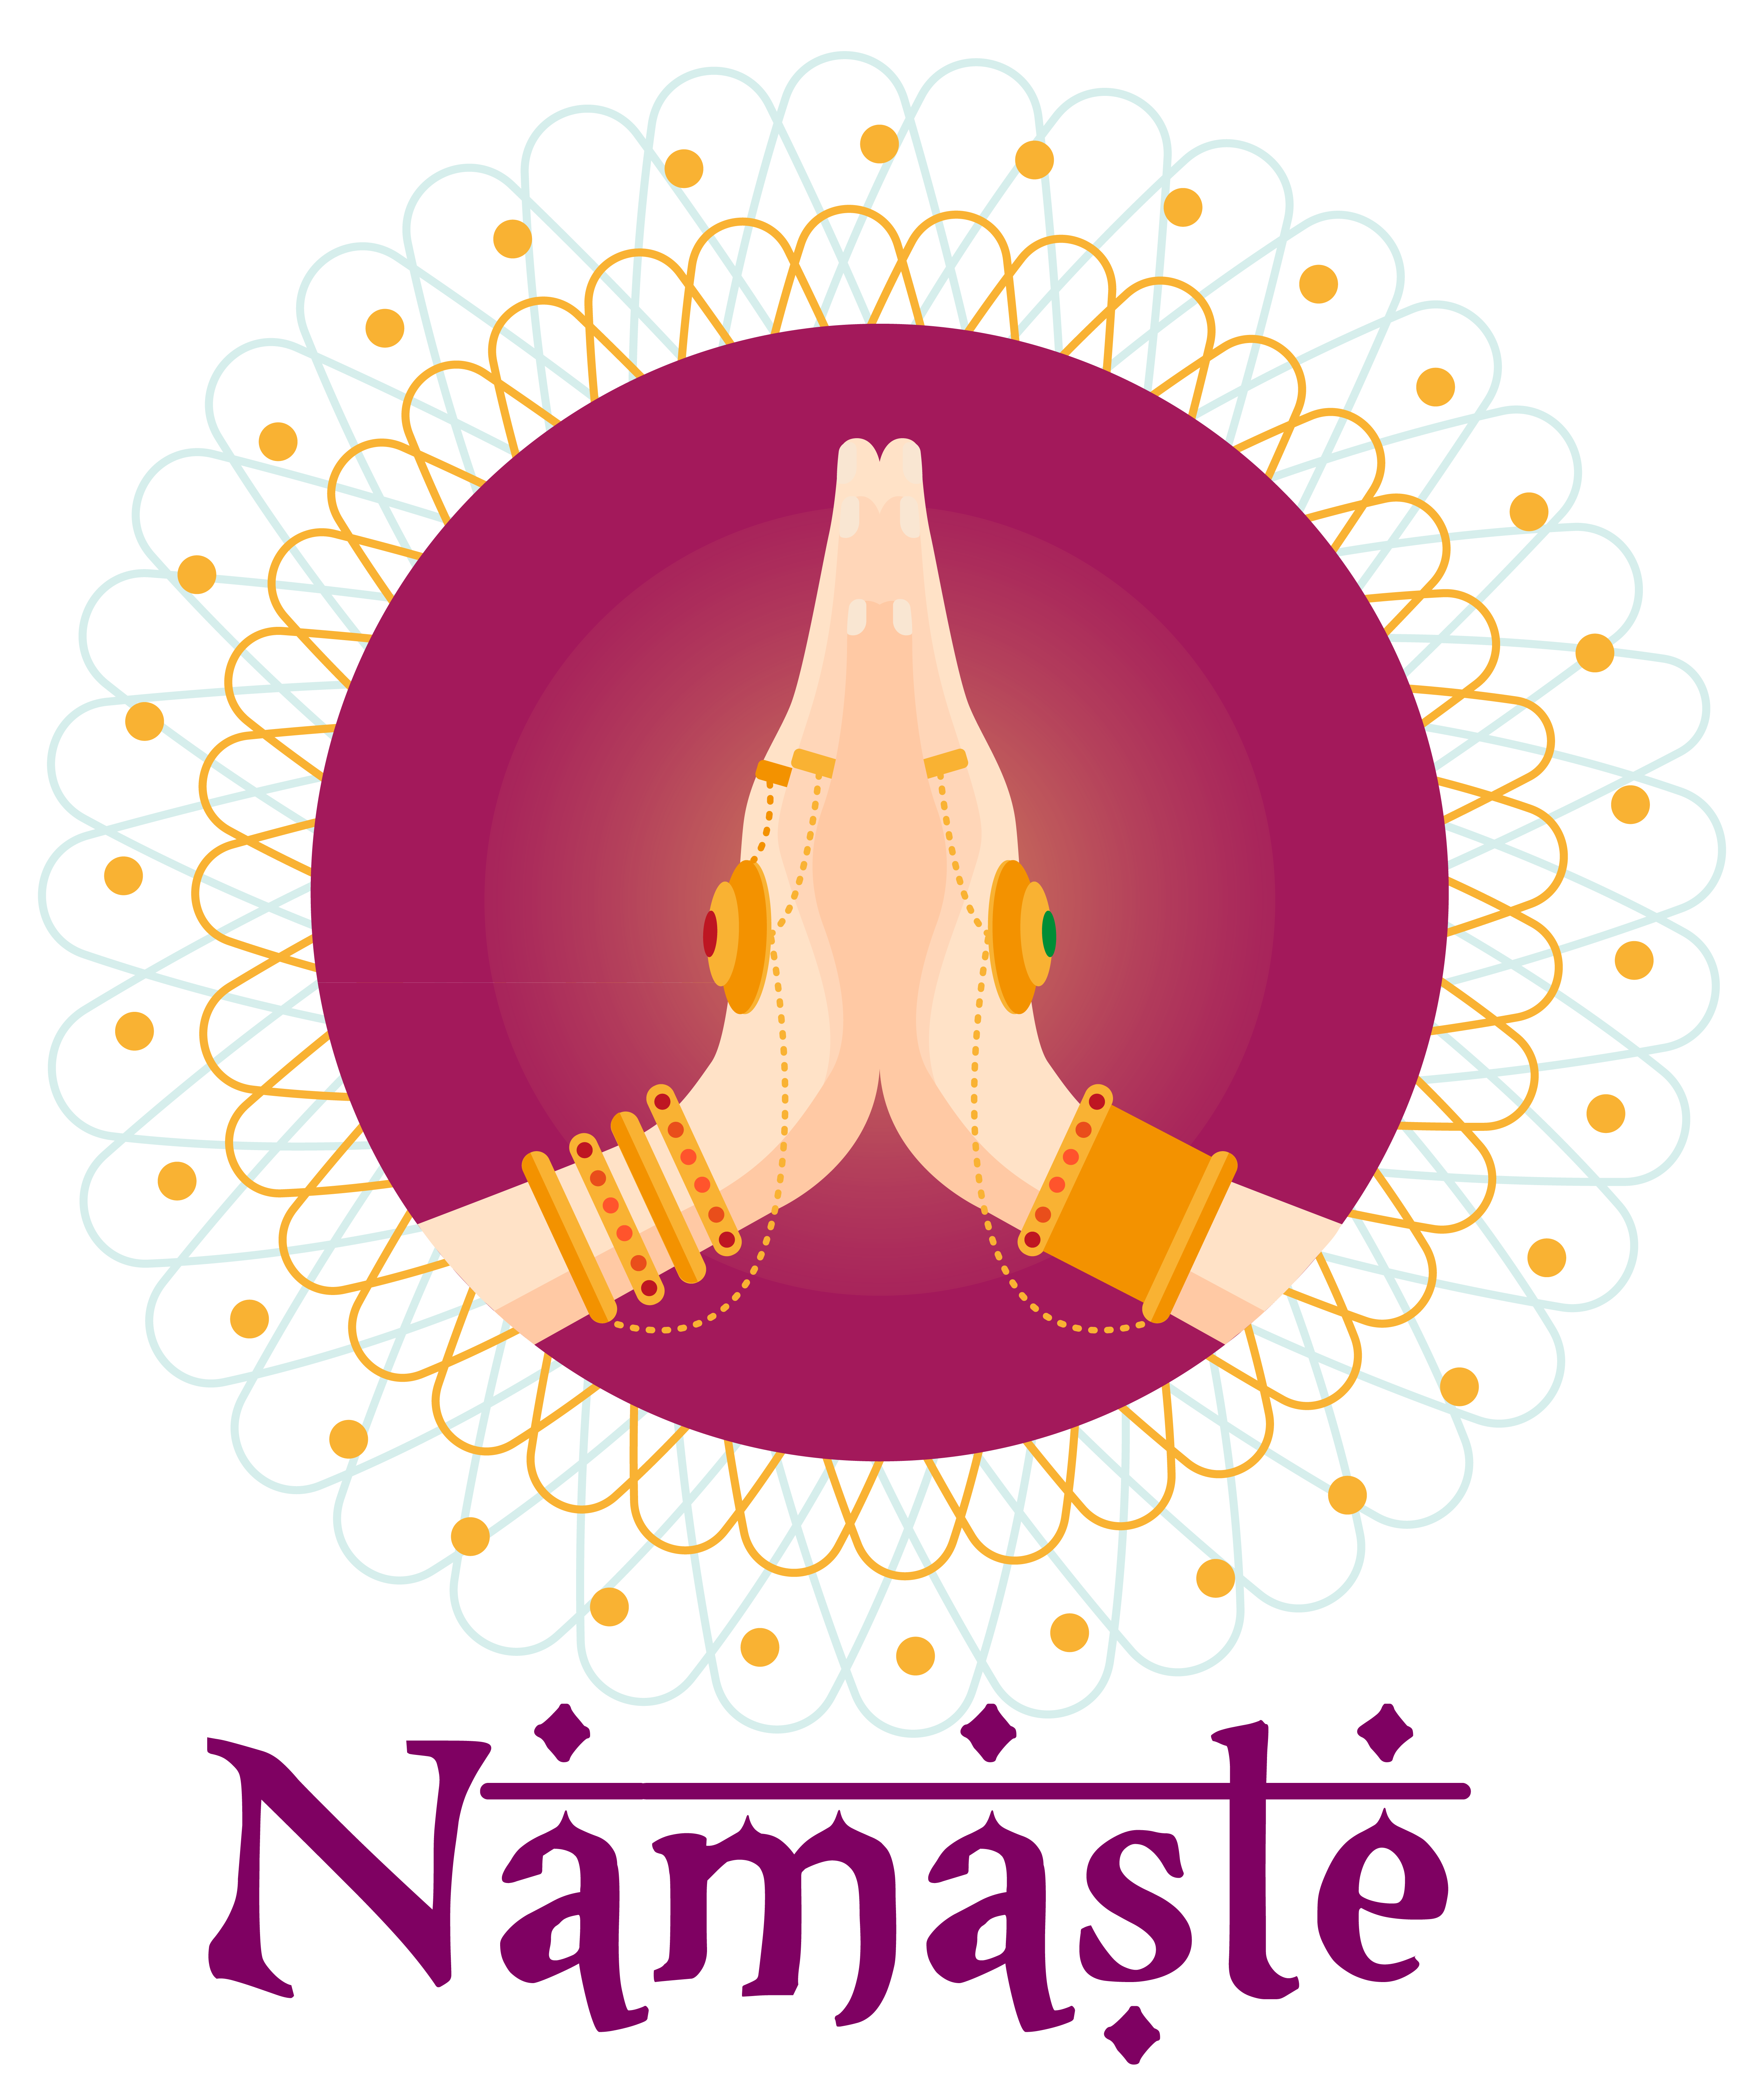 namaste png image. Namaste image, Islamic wallpaper, Image